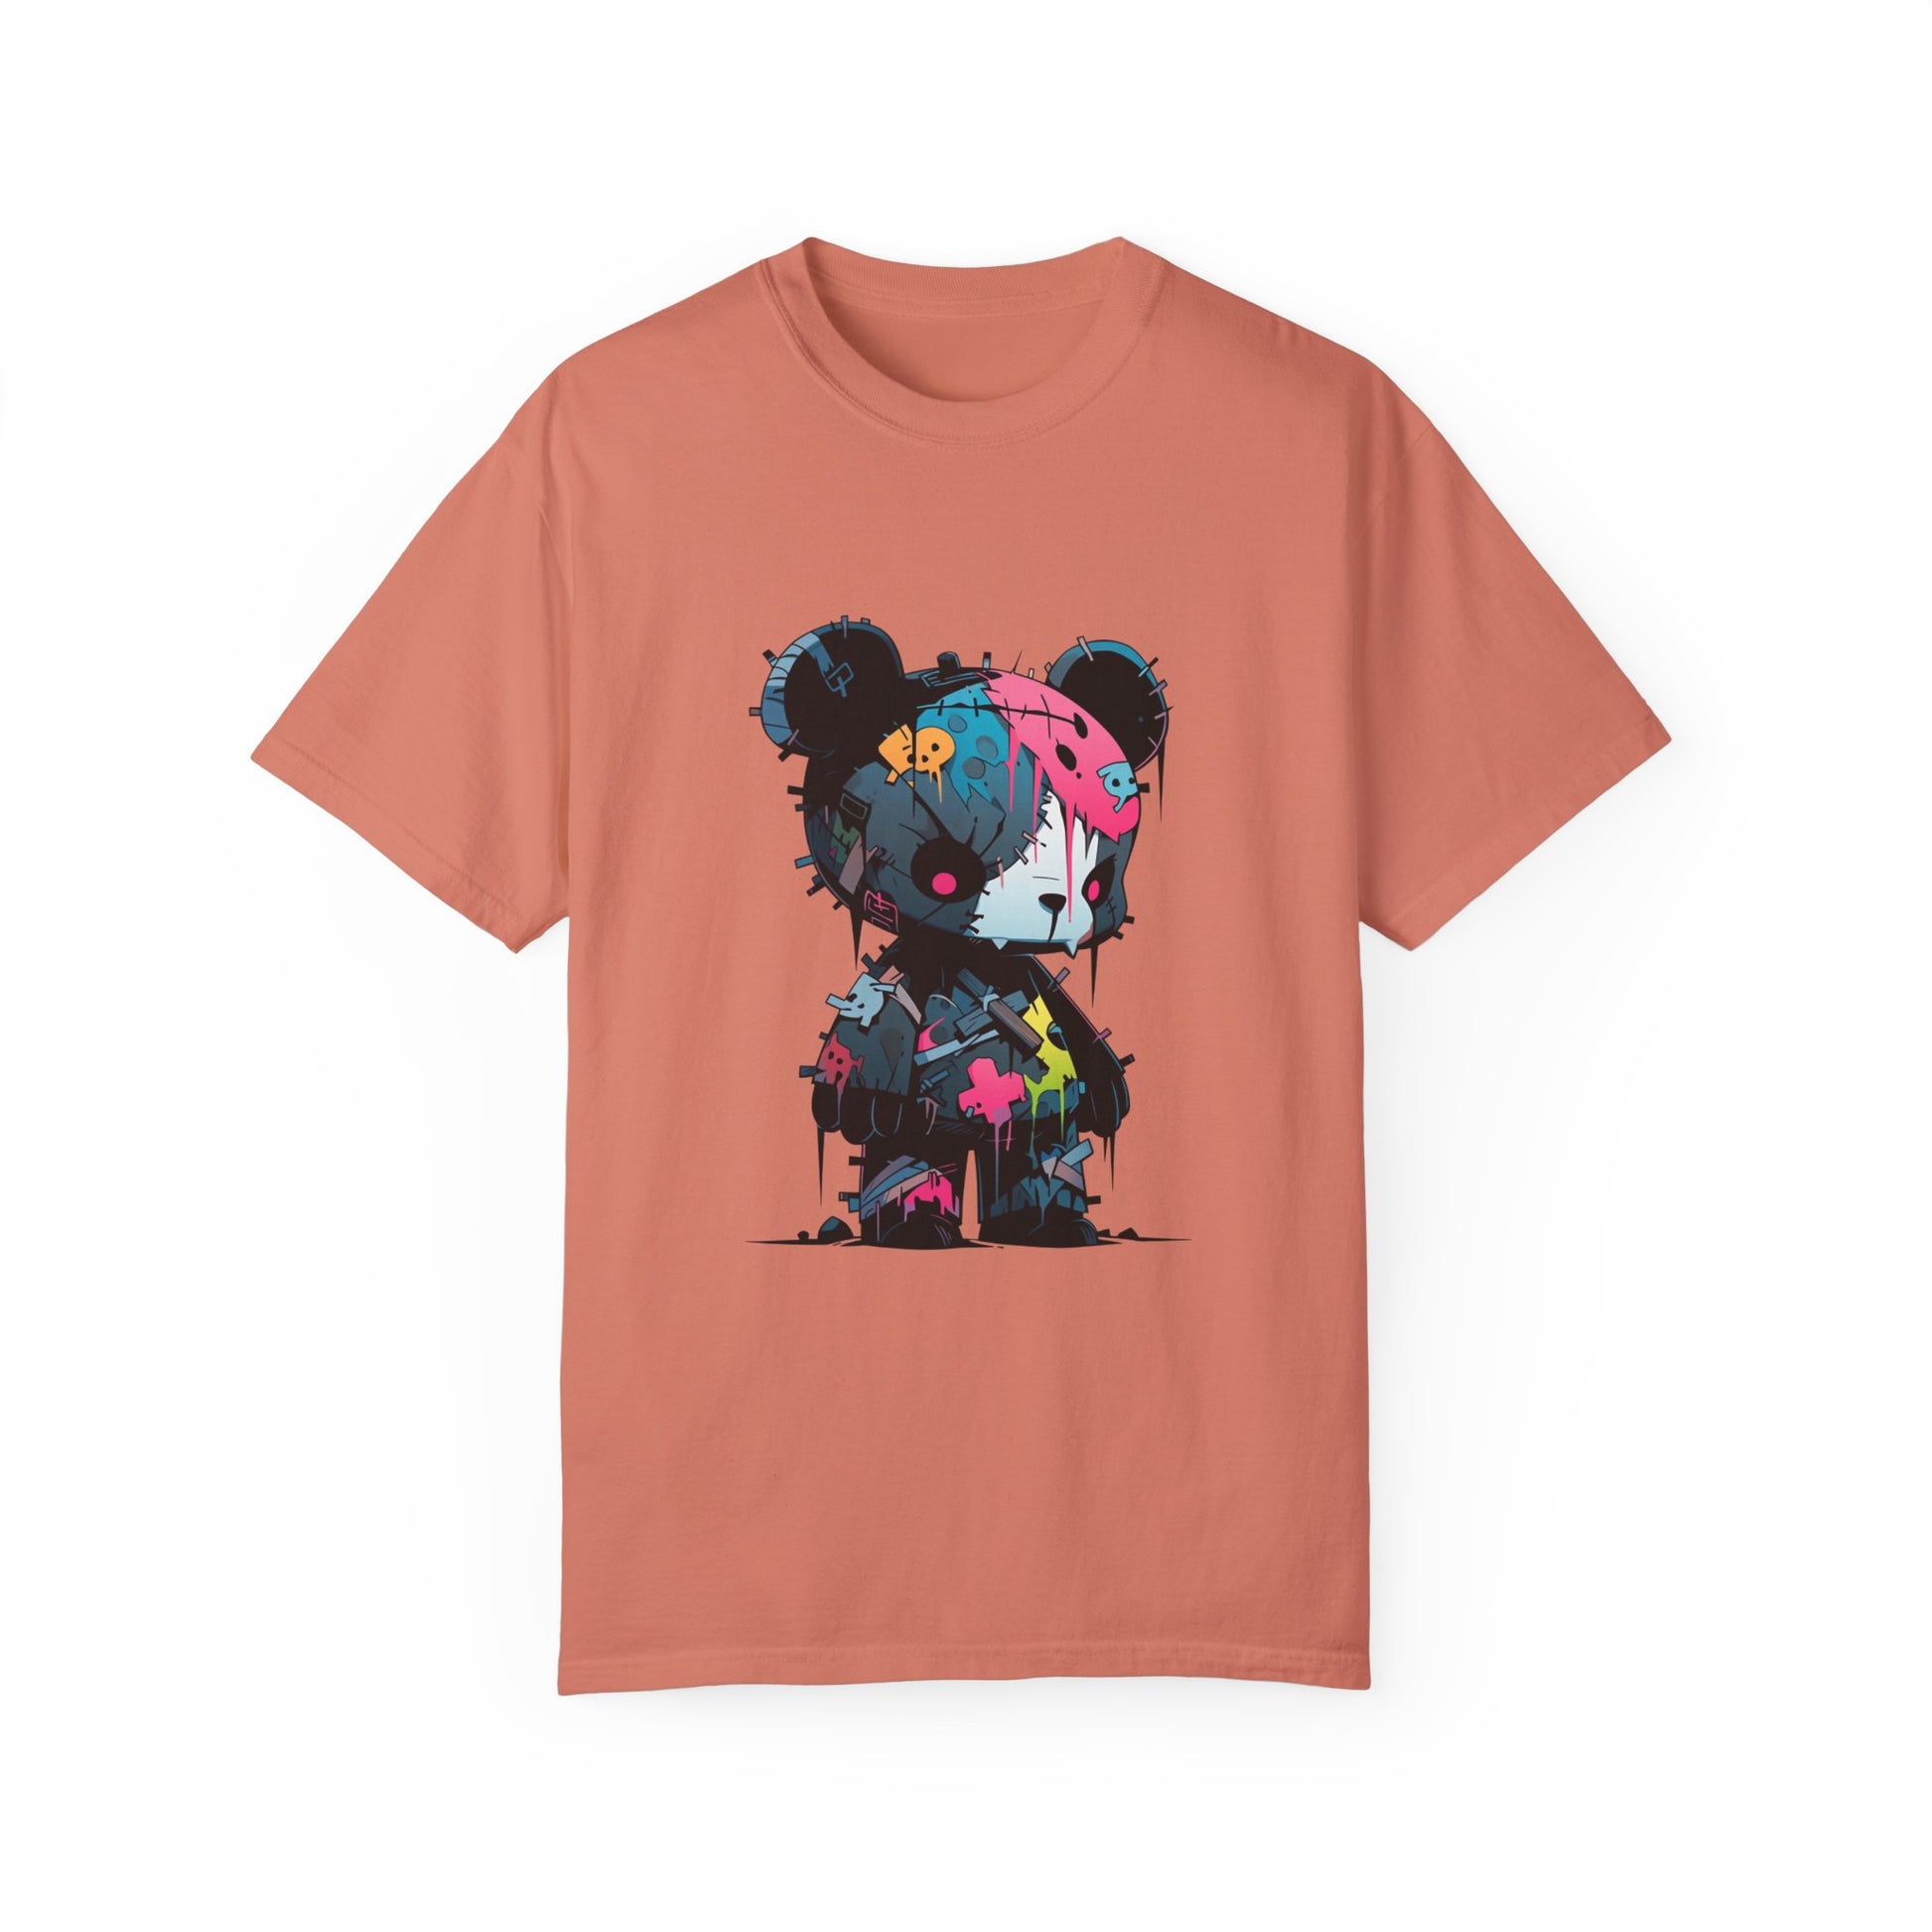 Hip Hop Teddy Bear Graphic Unisex Garment-dyed T-shirt Cotton Funny Humorous Graphic Soft Premium Unisex Men Women Terracotta T-shirt Birthday Gift-14